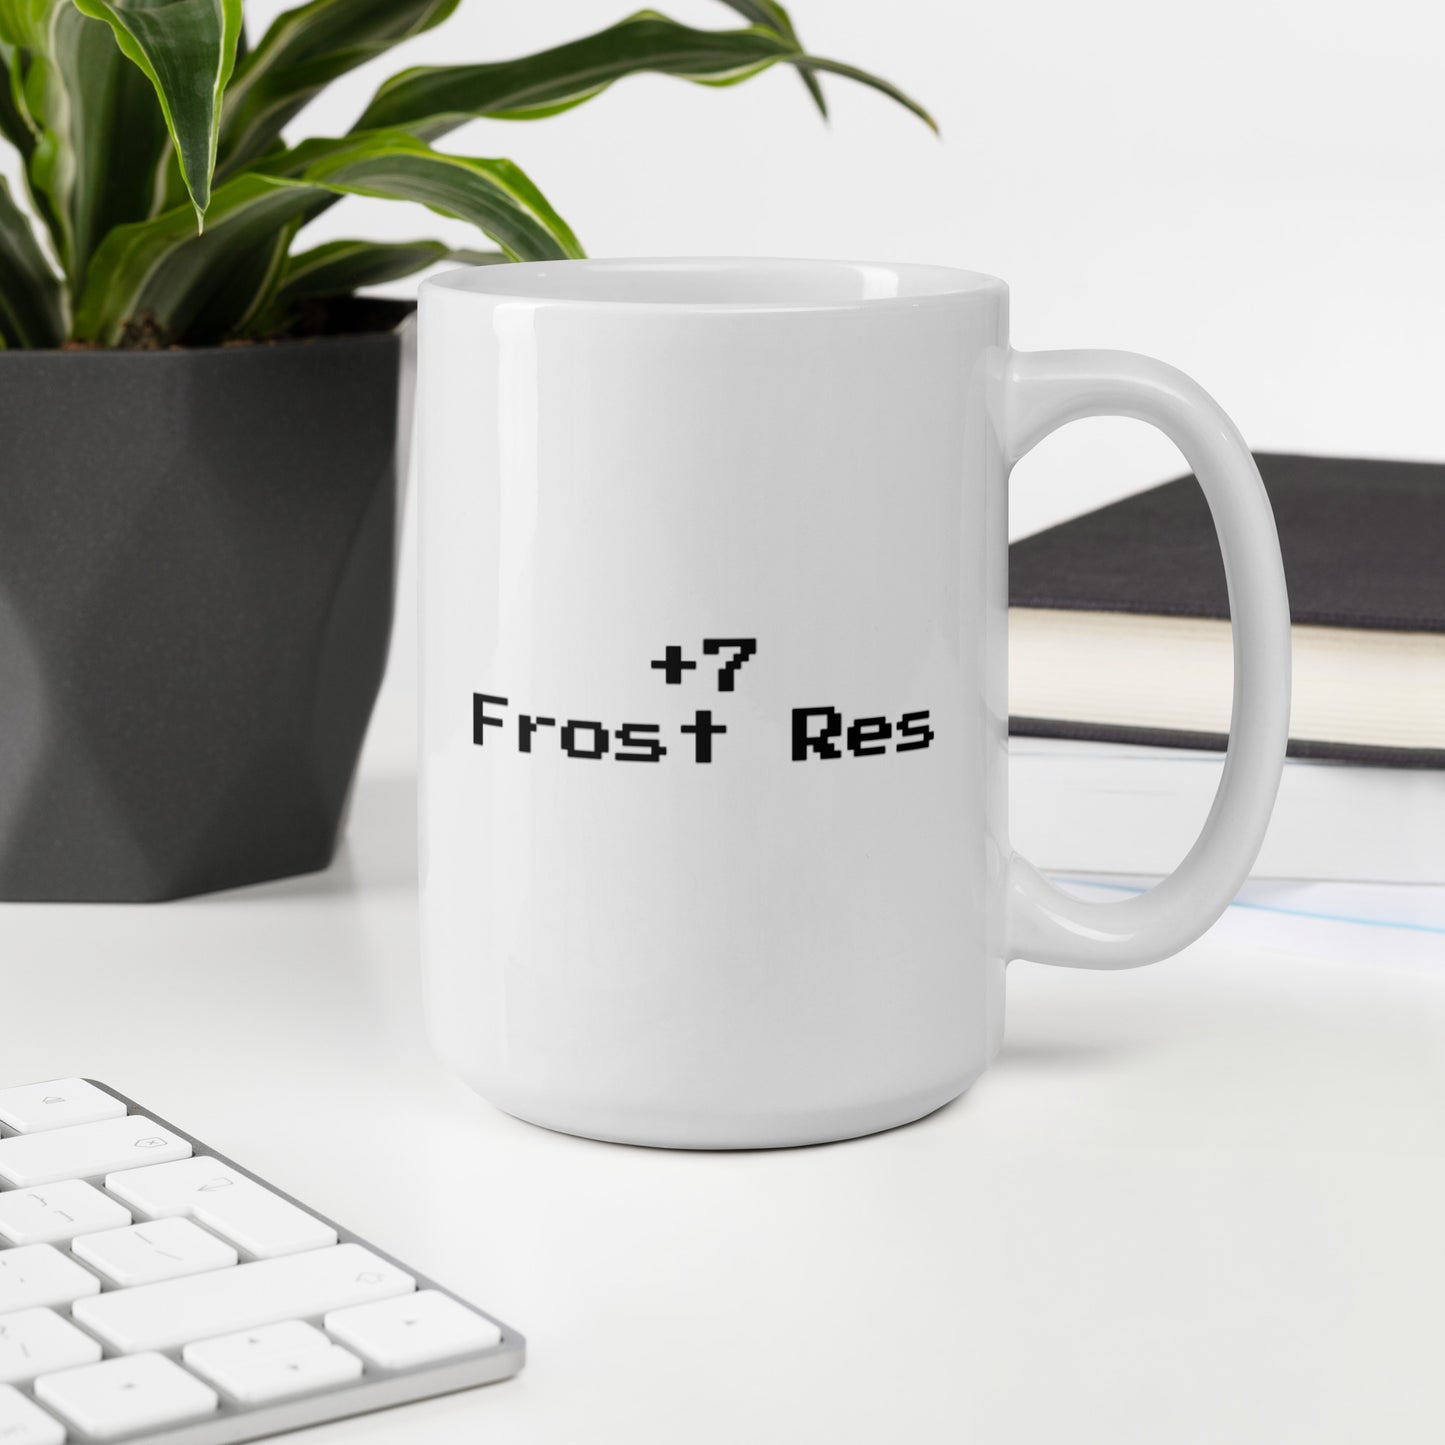 +7 frost res - Mug